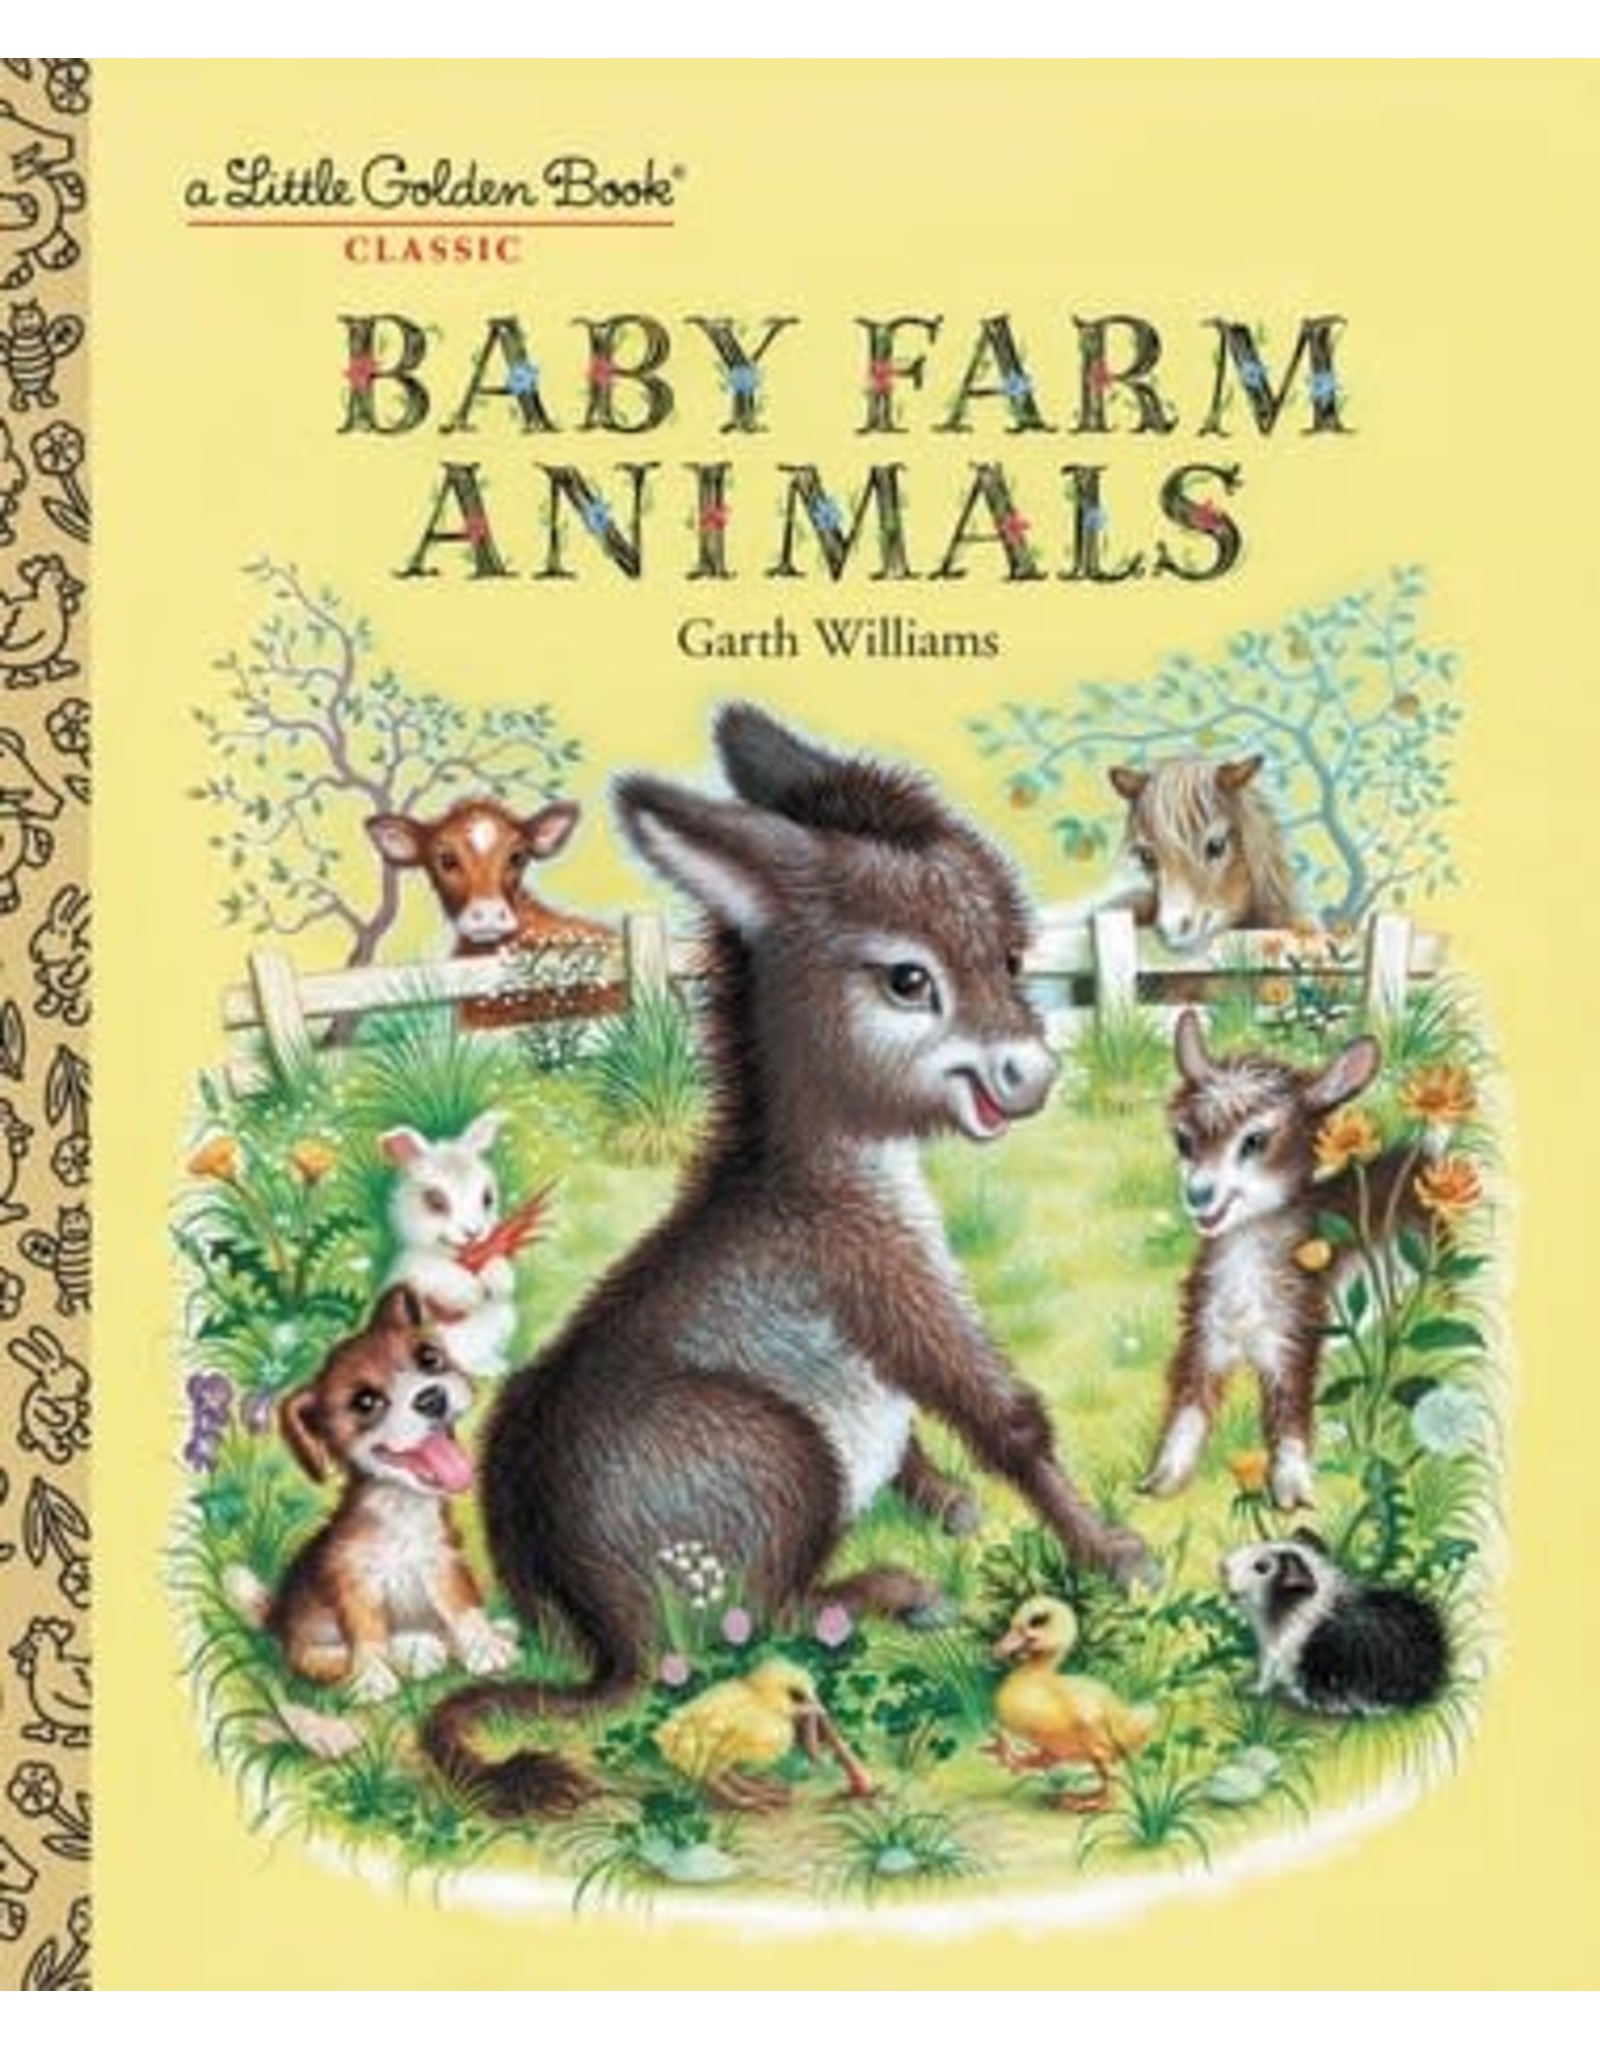 Baby Farm Animals - Garth Williams